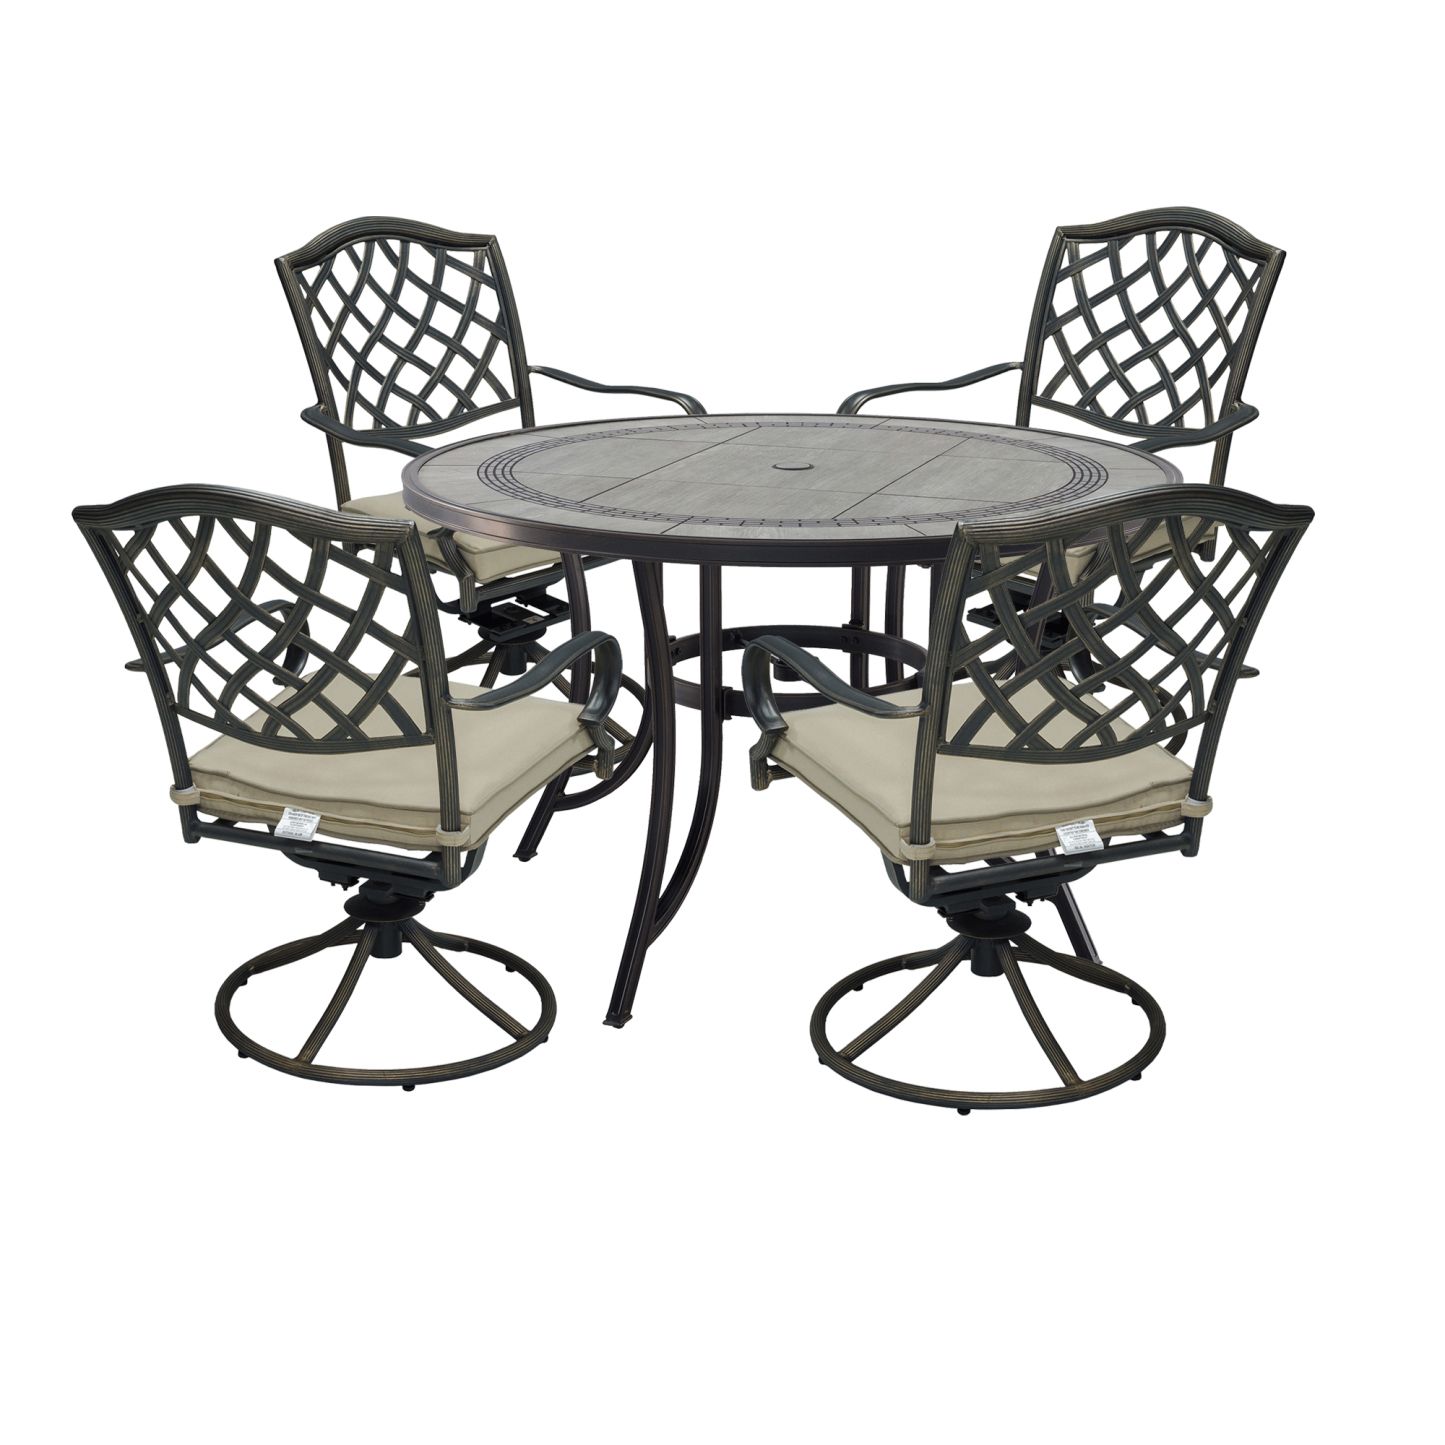 Mondawe 5 Piece Outdoor Dining Set Aluminum Swivel Rocker Chair Set with Cushions 48 inch Round Alum Casting Table-Mondawe